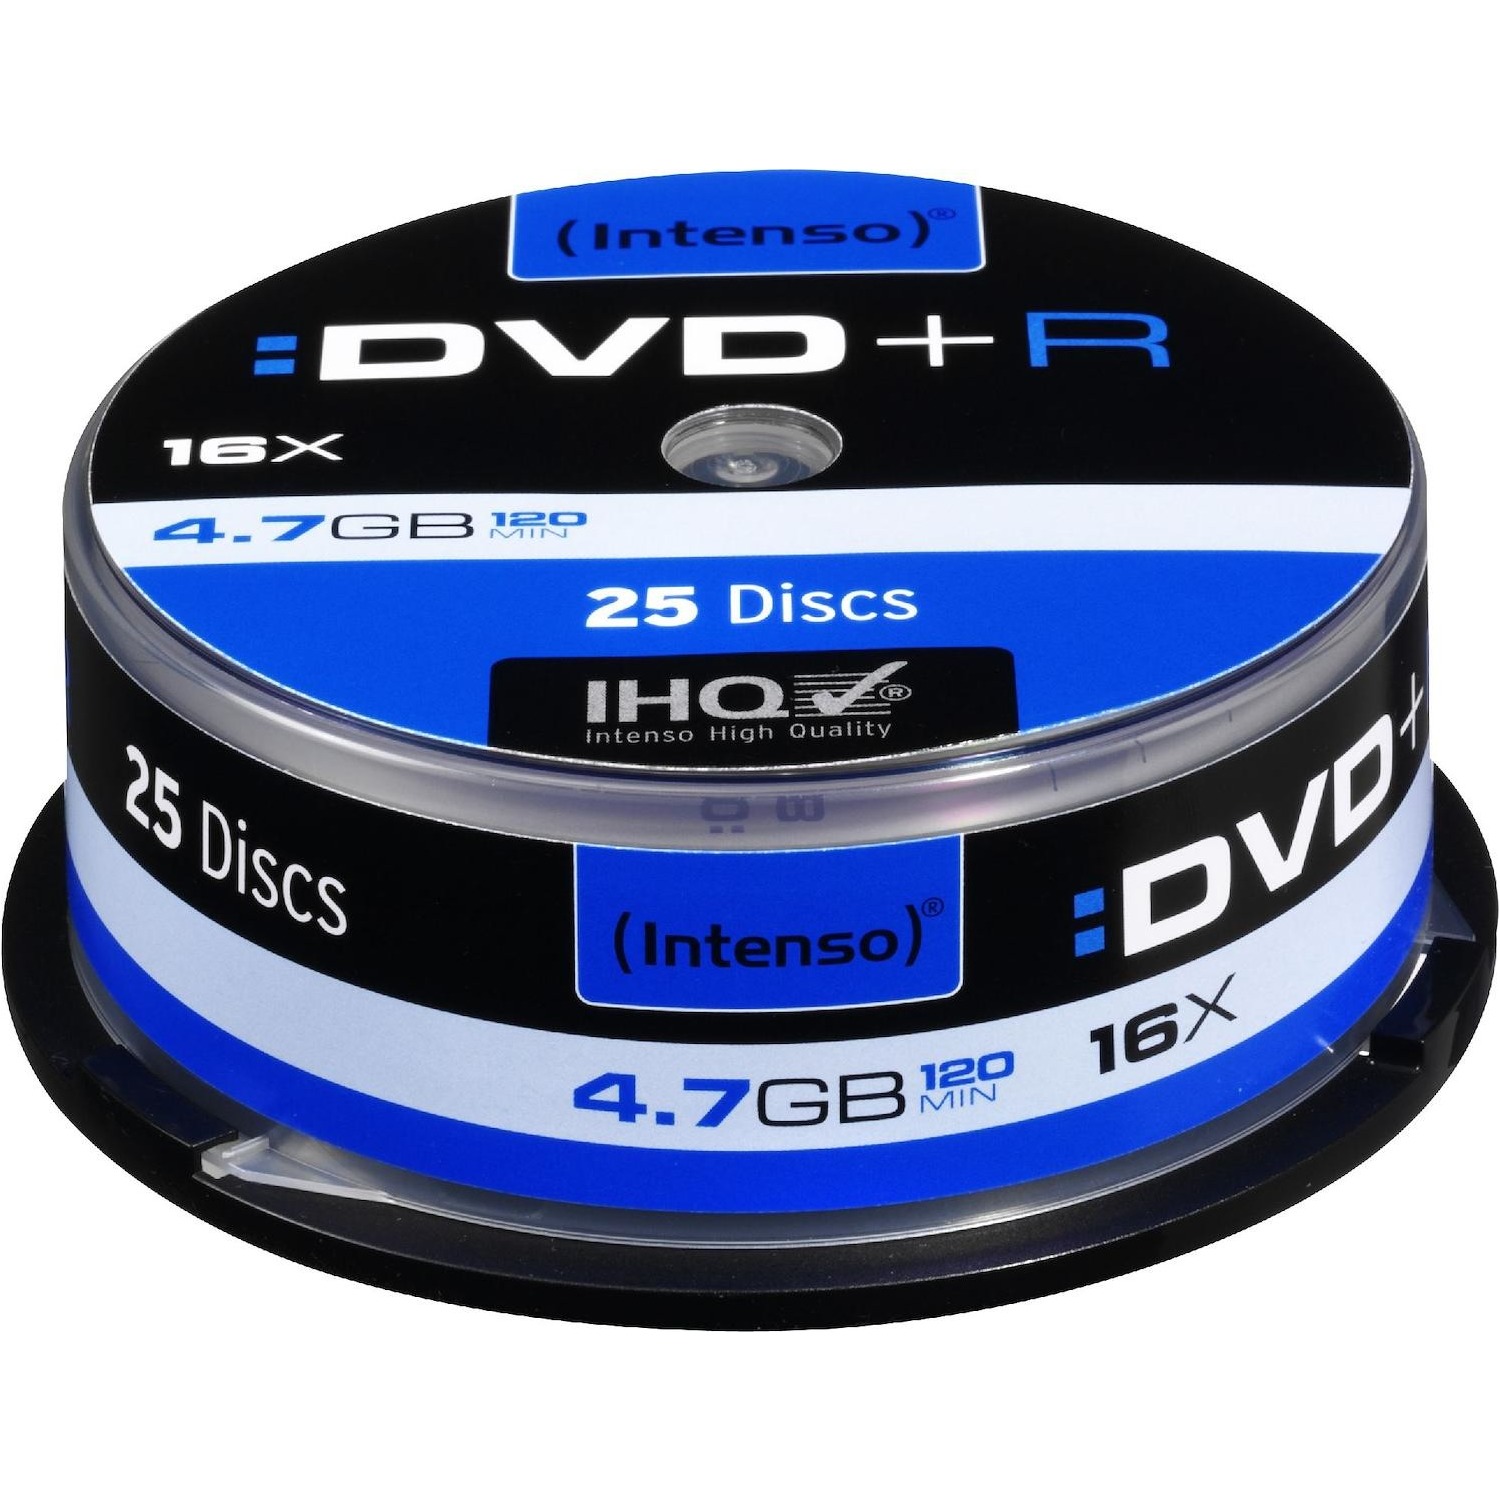 Immagine per DVD +R Intenso 4,70GB 25 pezzi Cake da DIMOStore